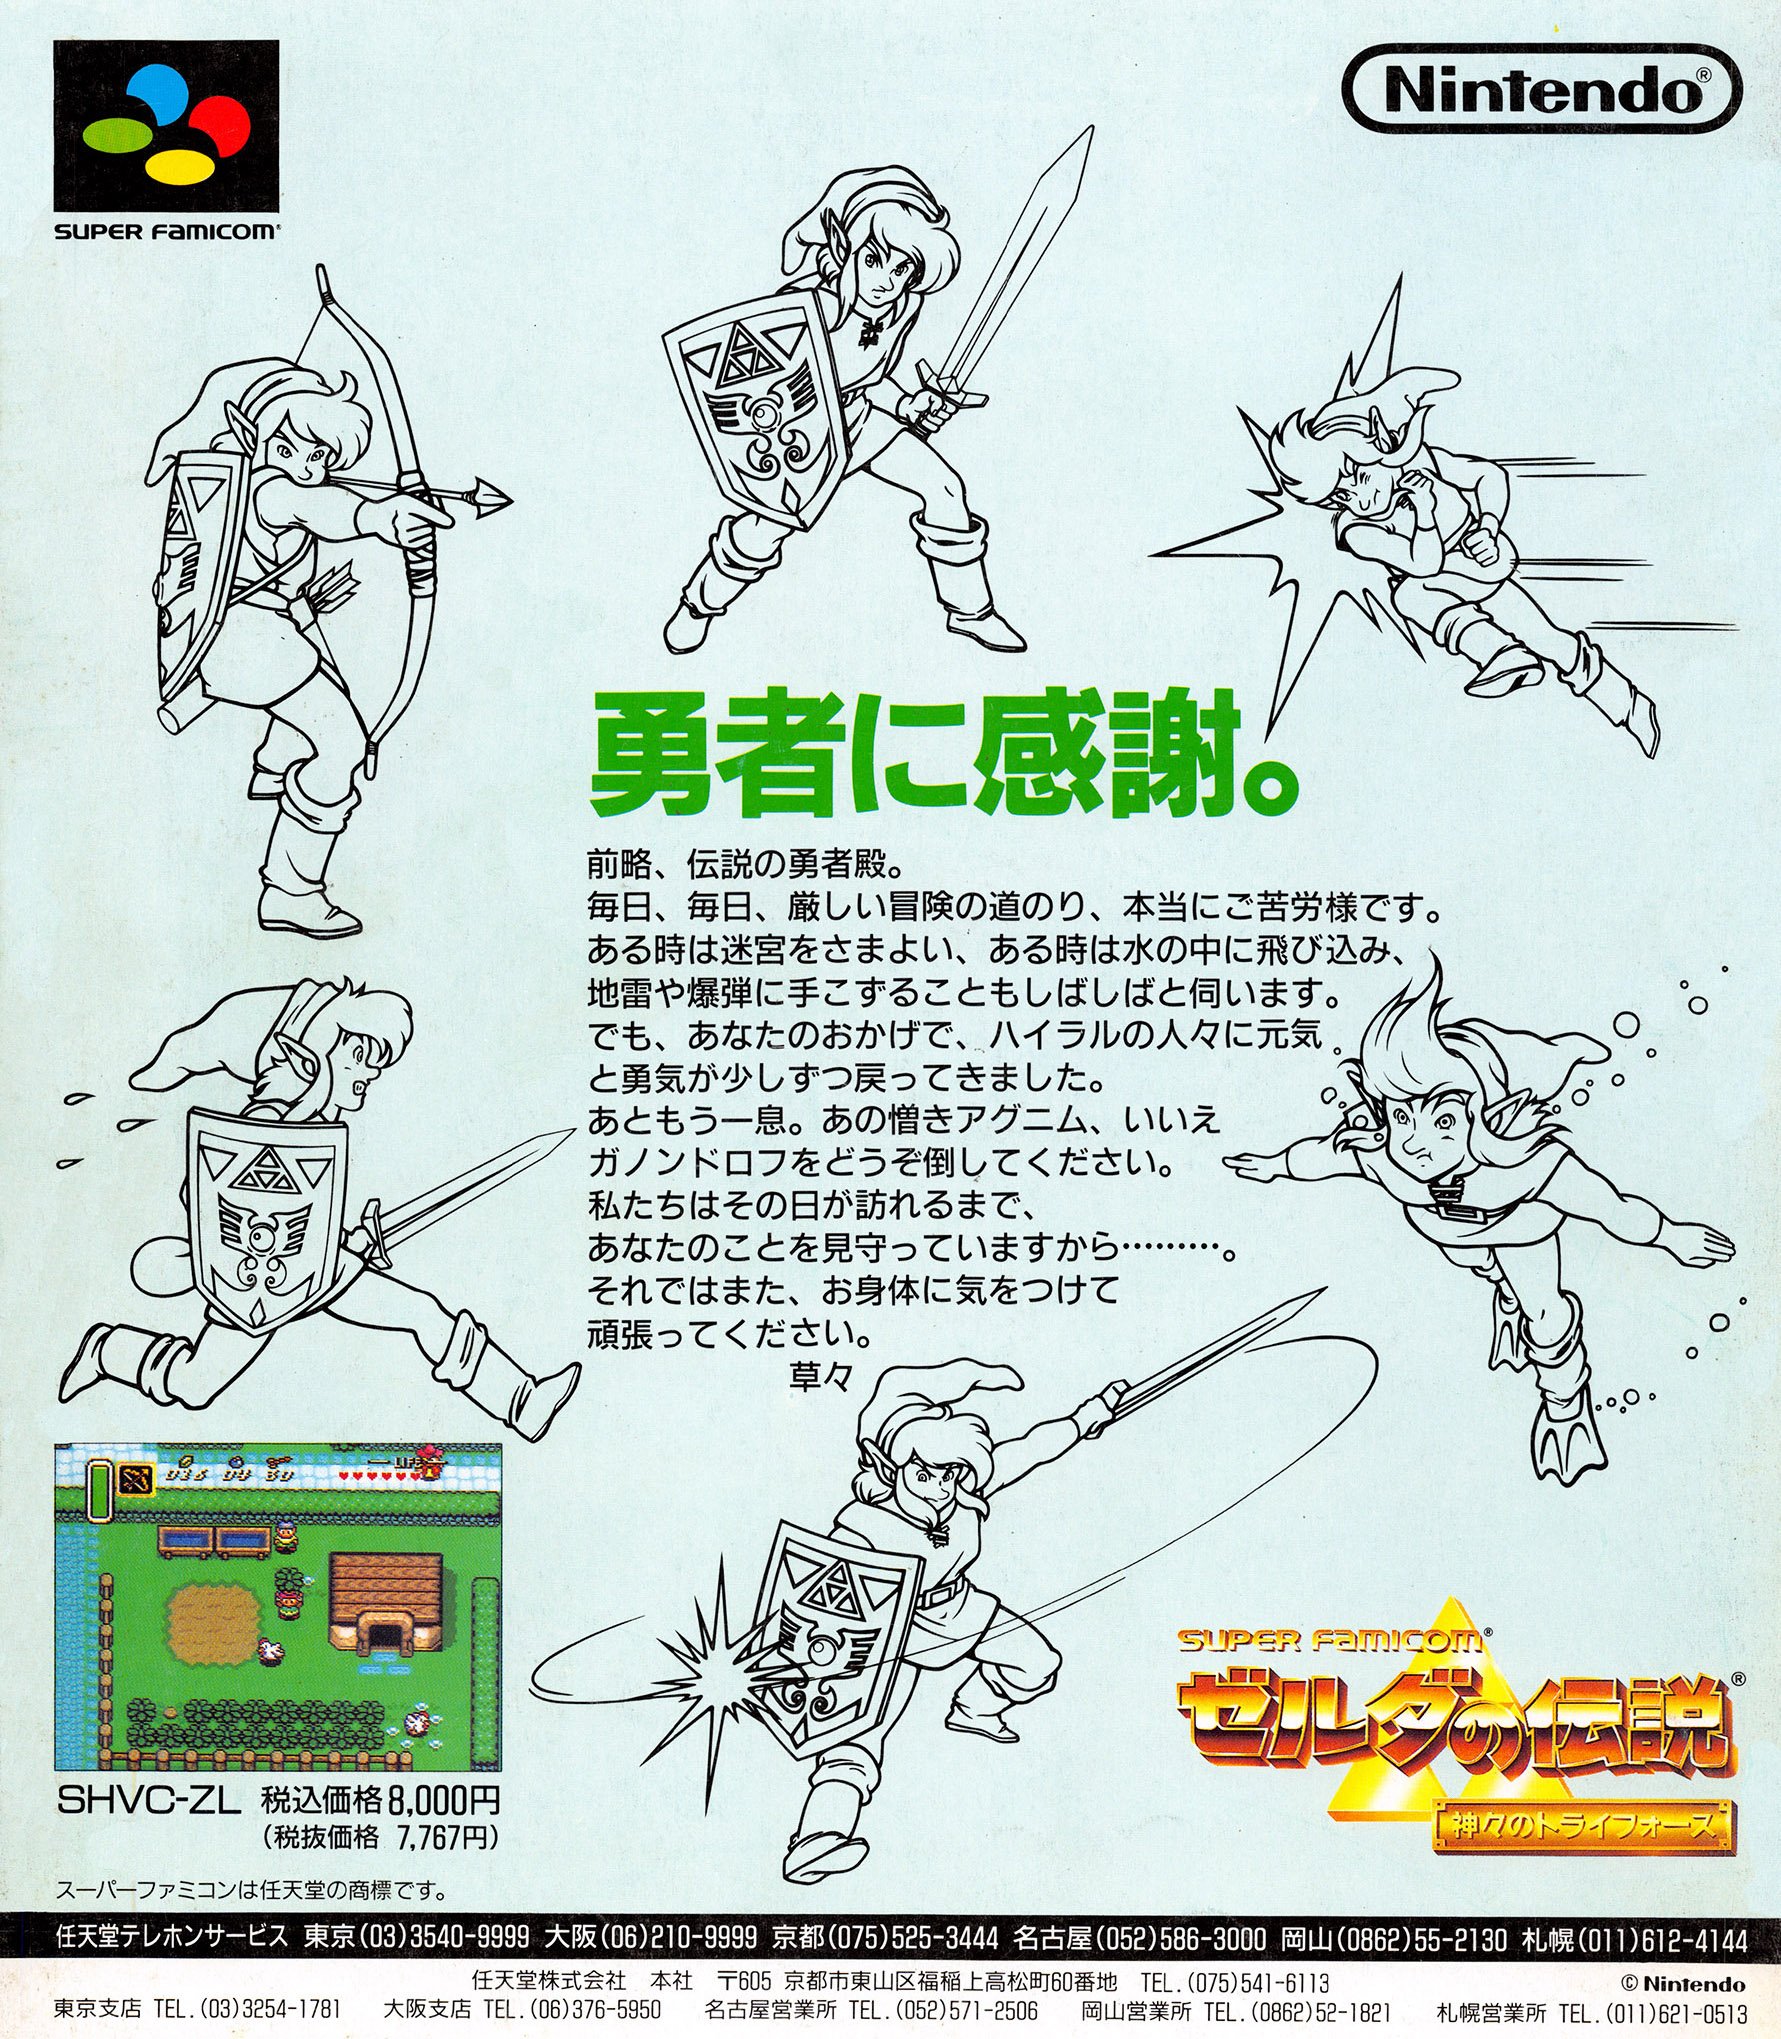 Legend of Zelda: A Link to the Past (Zelda no Densetsu: Kamigami no Triforce) (Japan)